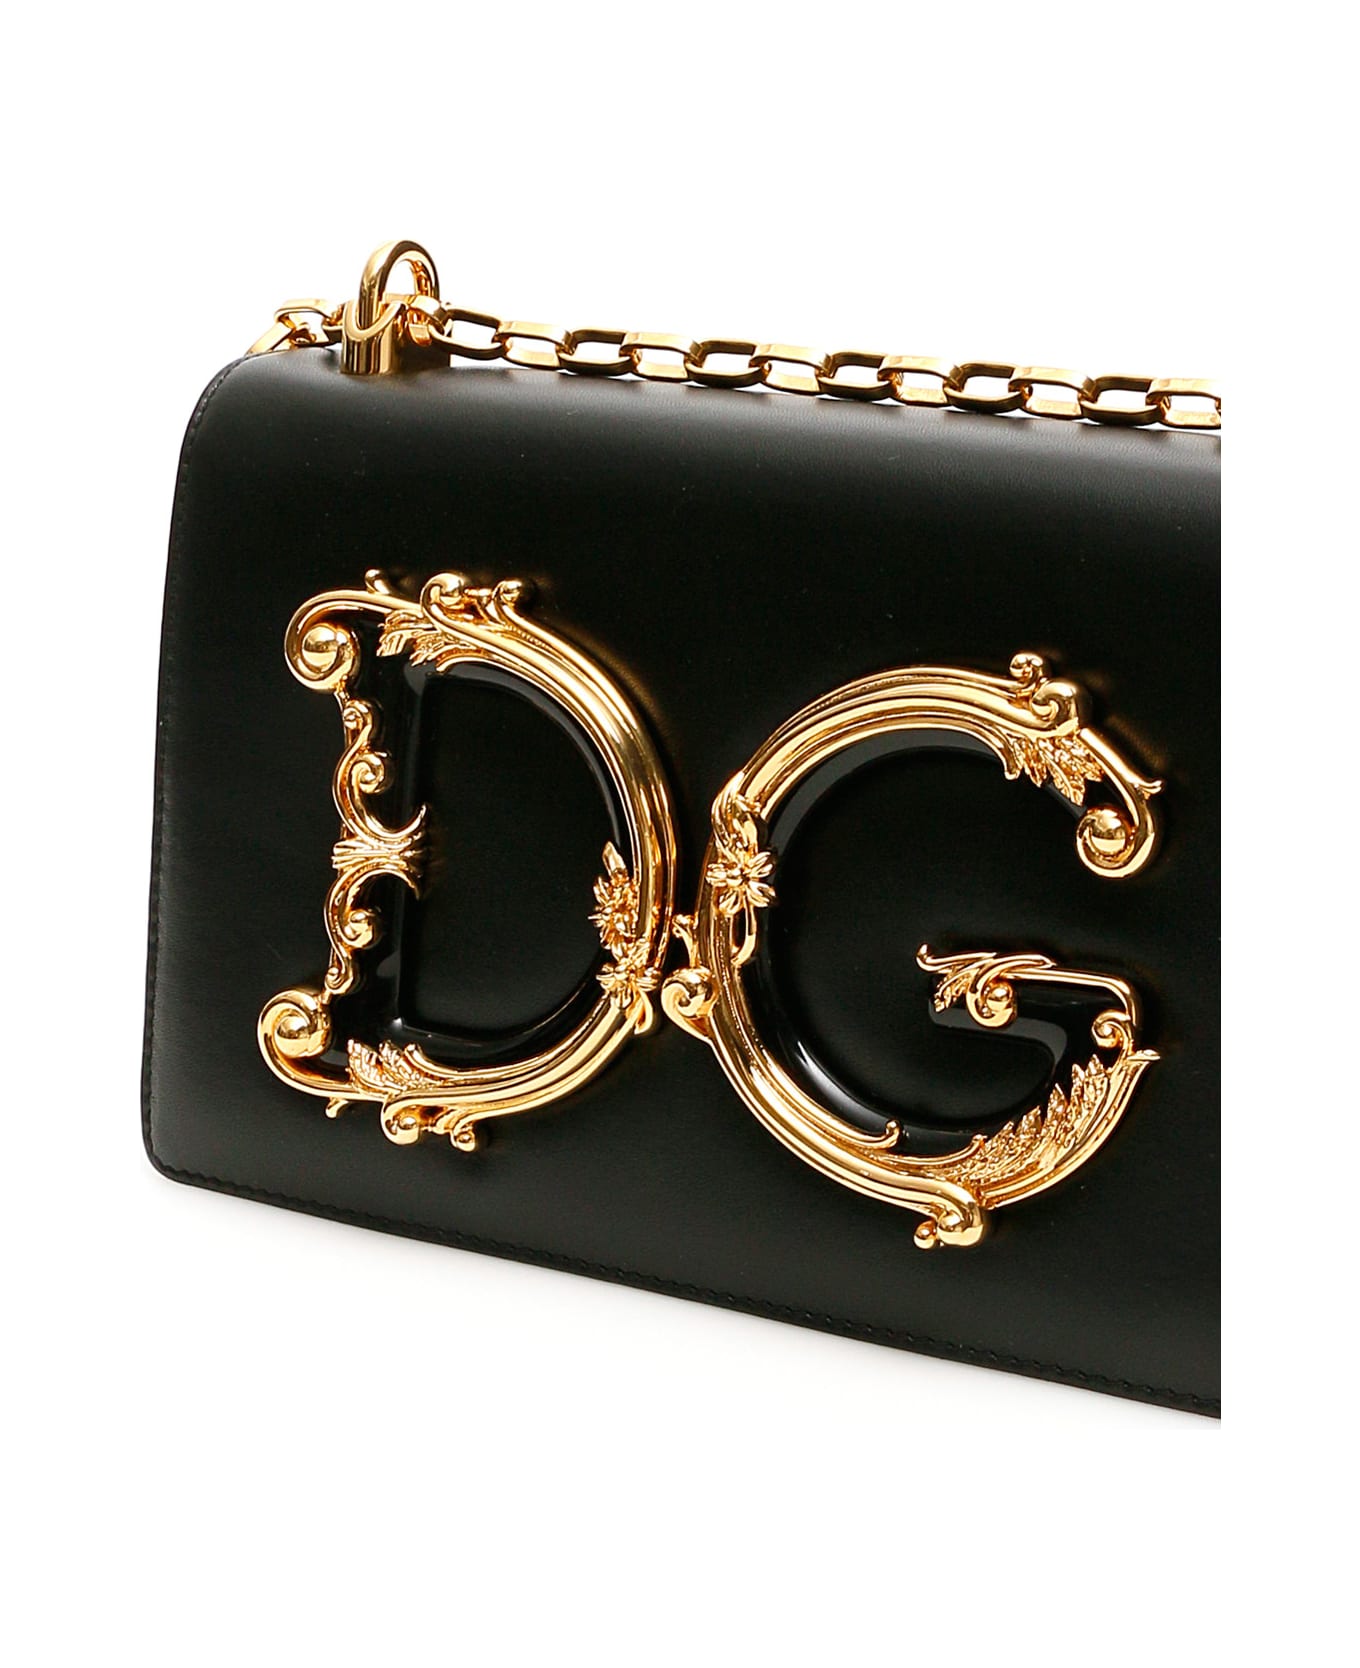 Dolce & Gabbana Nappa Leather Dg Girls Bag - Nero